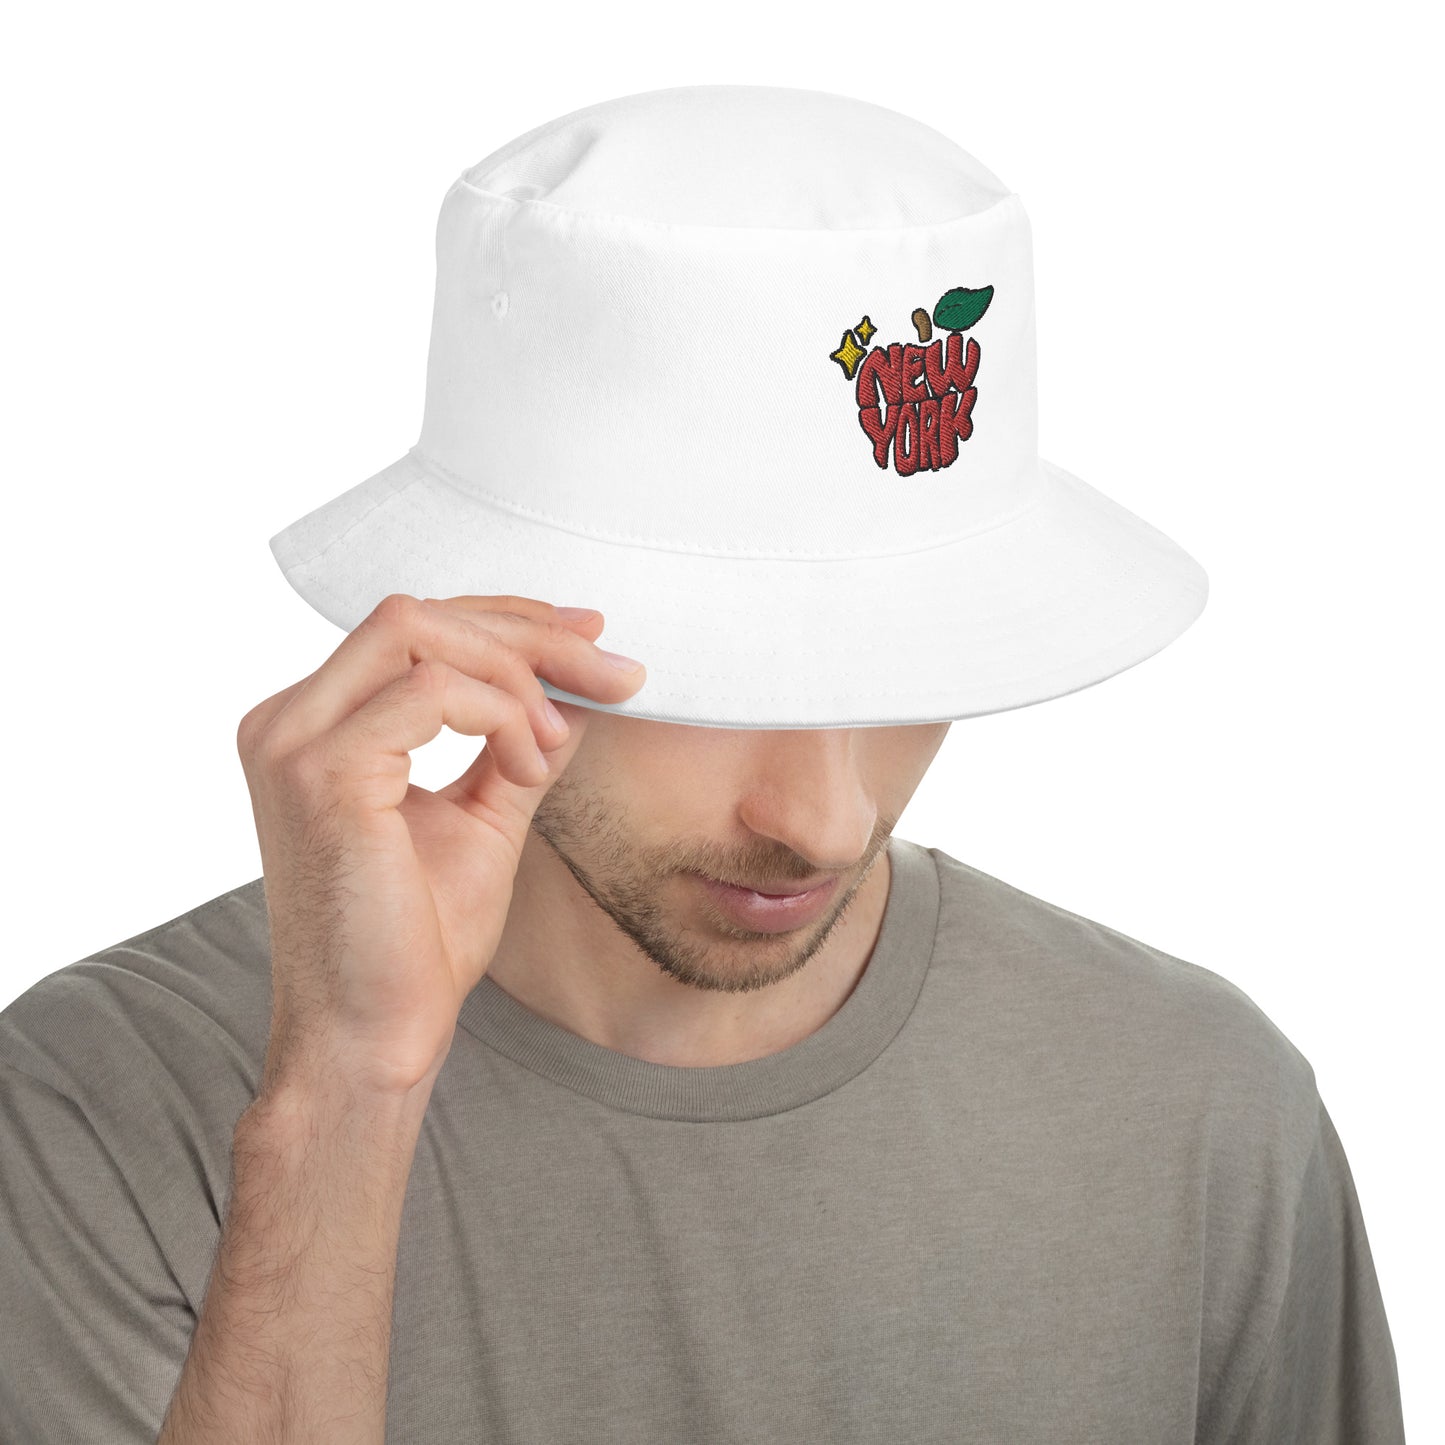 New York Apple Logo Embroidered Bucket Hat